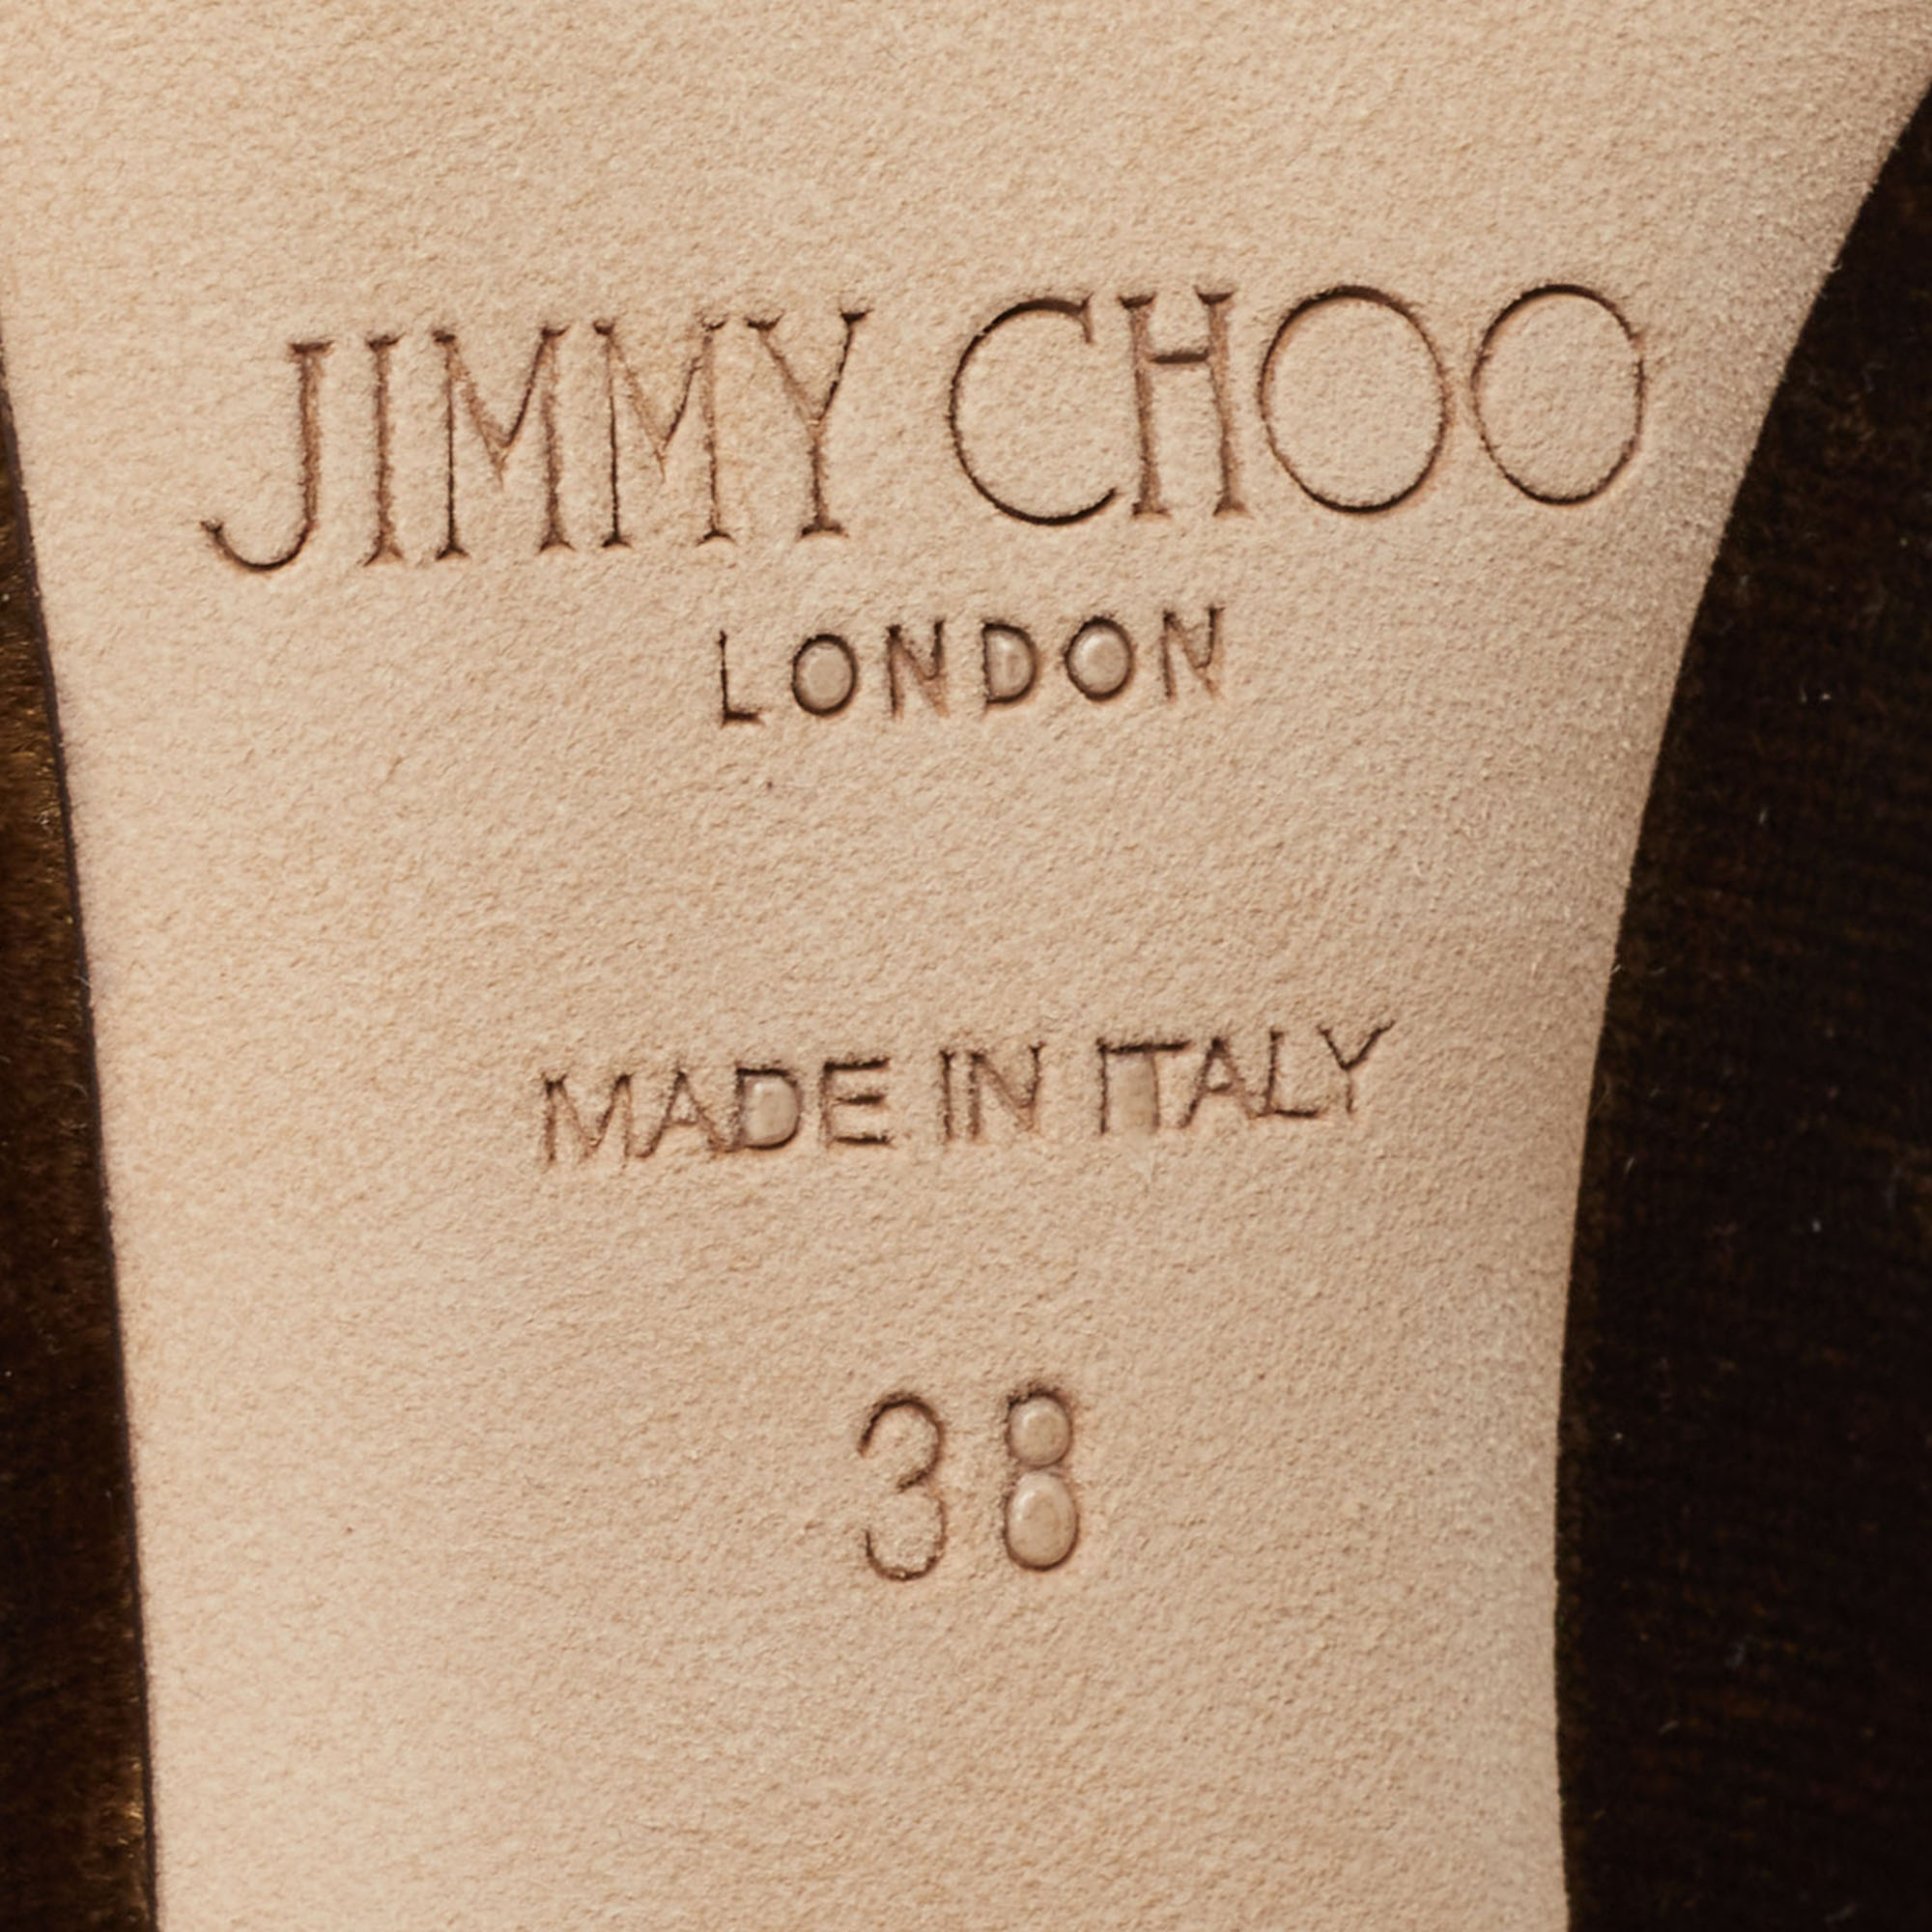 Jimmy Choo Olive Green Velvet Lacey Pumps Size 38